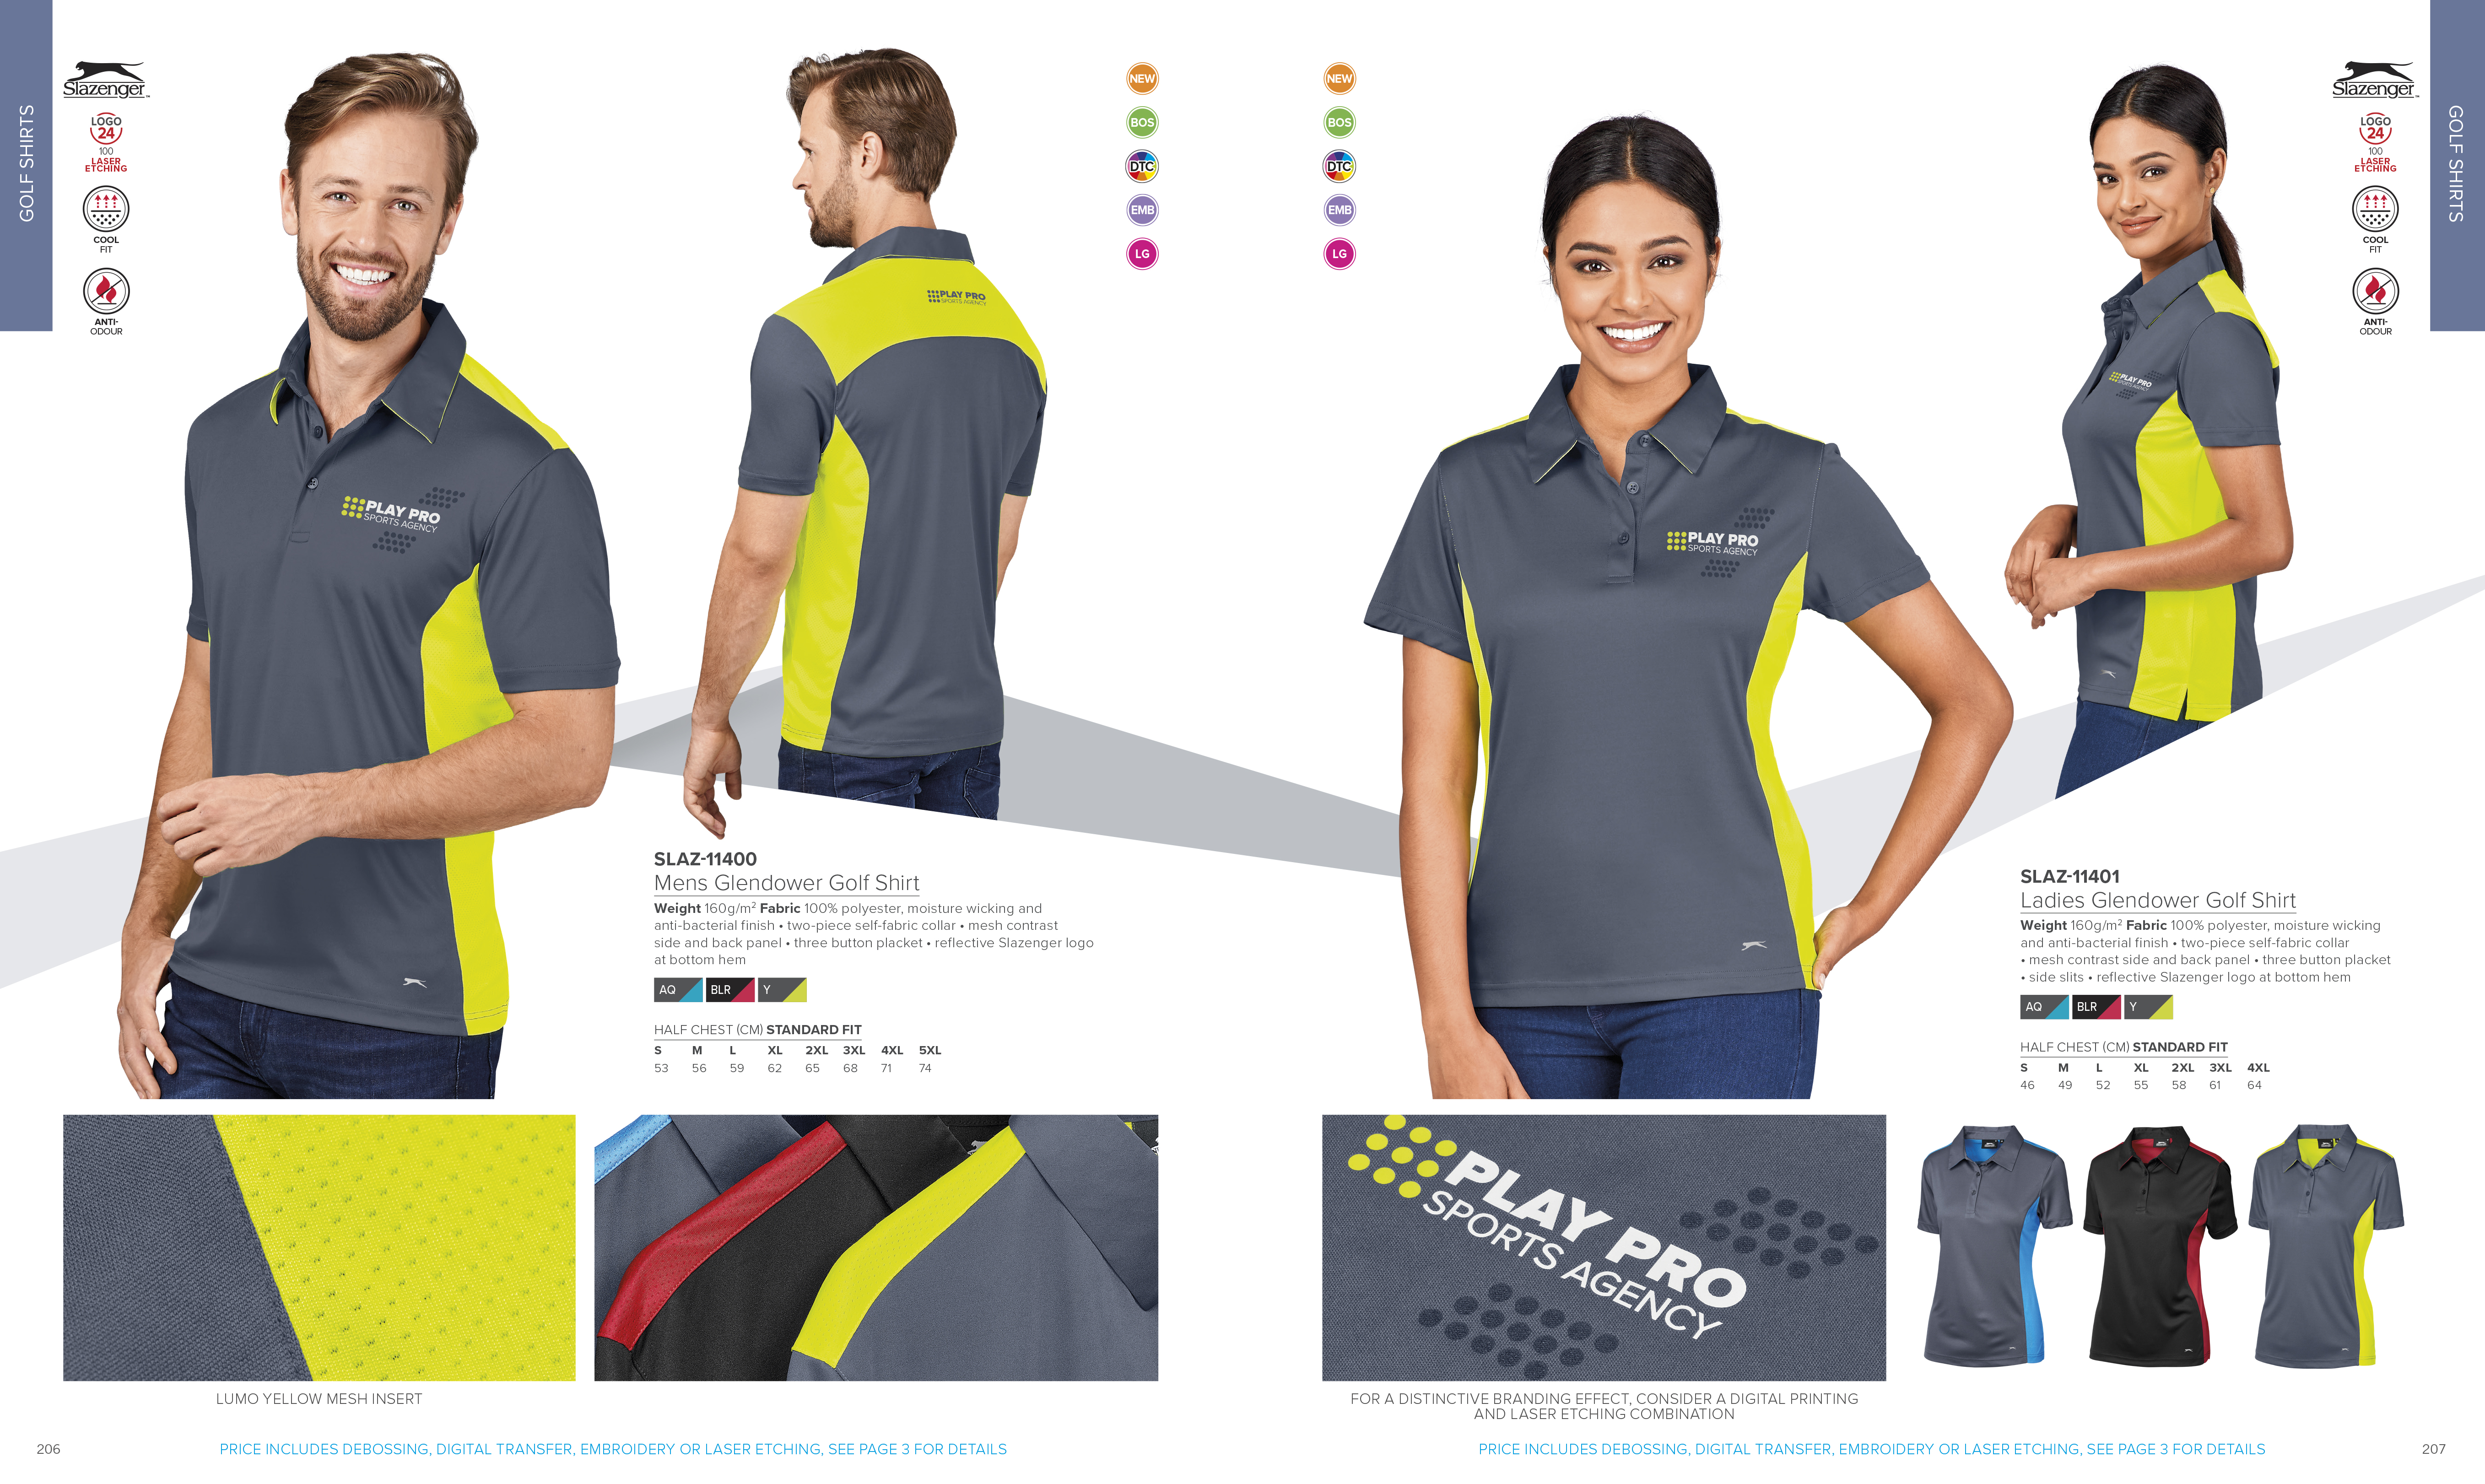 SLAZ-11401 - Ladies Glendower Golf Shirt - Catalogue Image